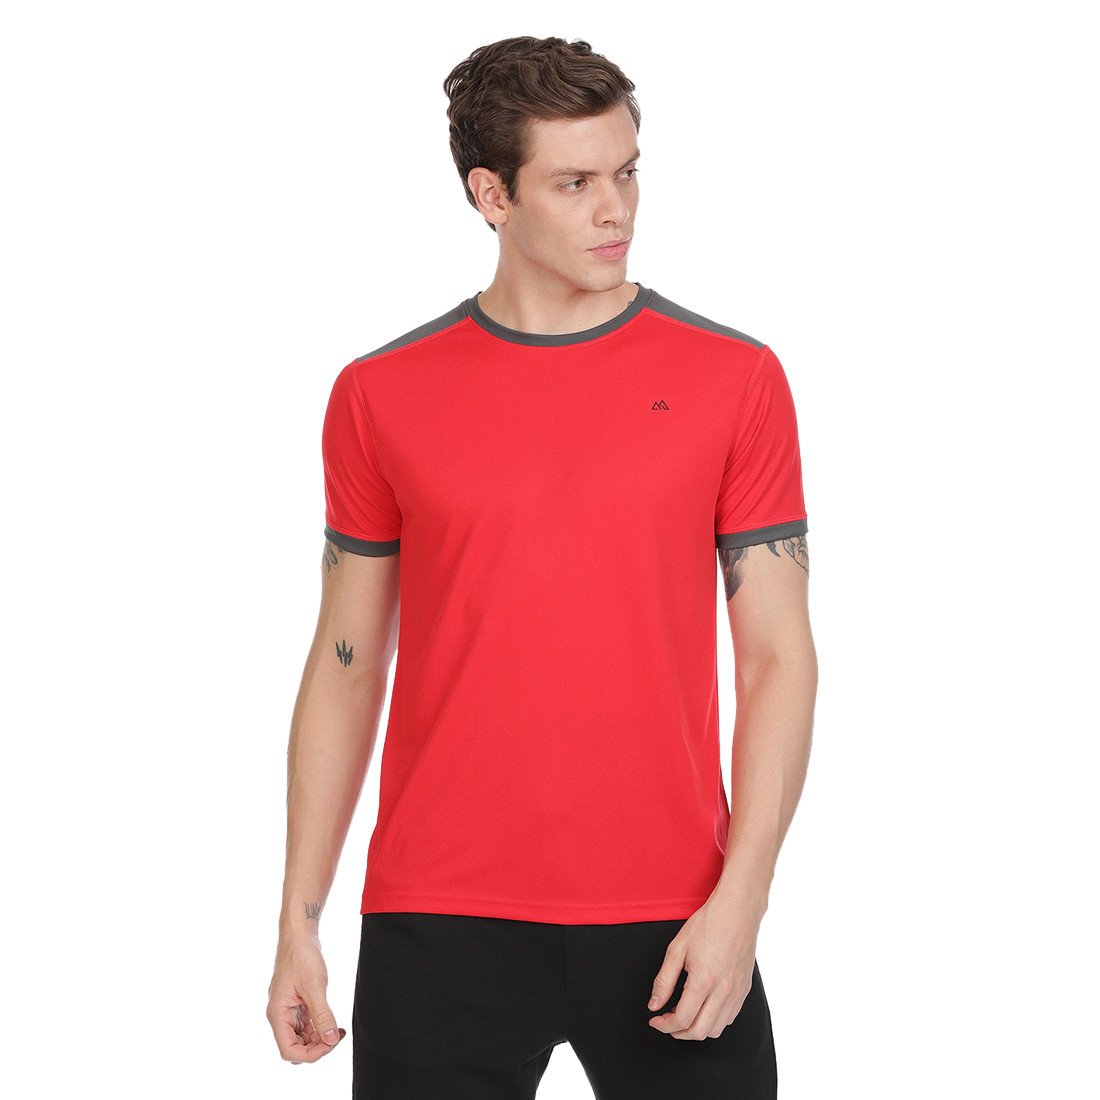 Bleualps Men's Activewear Sports Round Neck Half Sleeve T-Shirt - Orange | Sports T-Shirt | Workout T-Shirt | Gym Wear